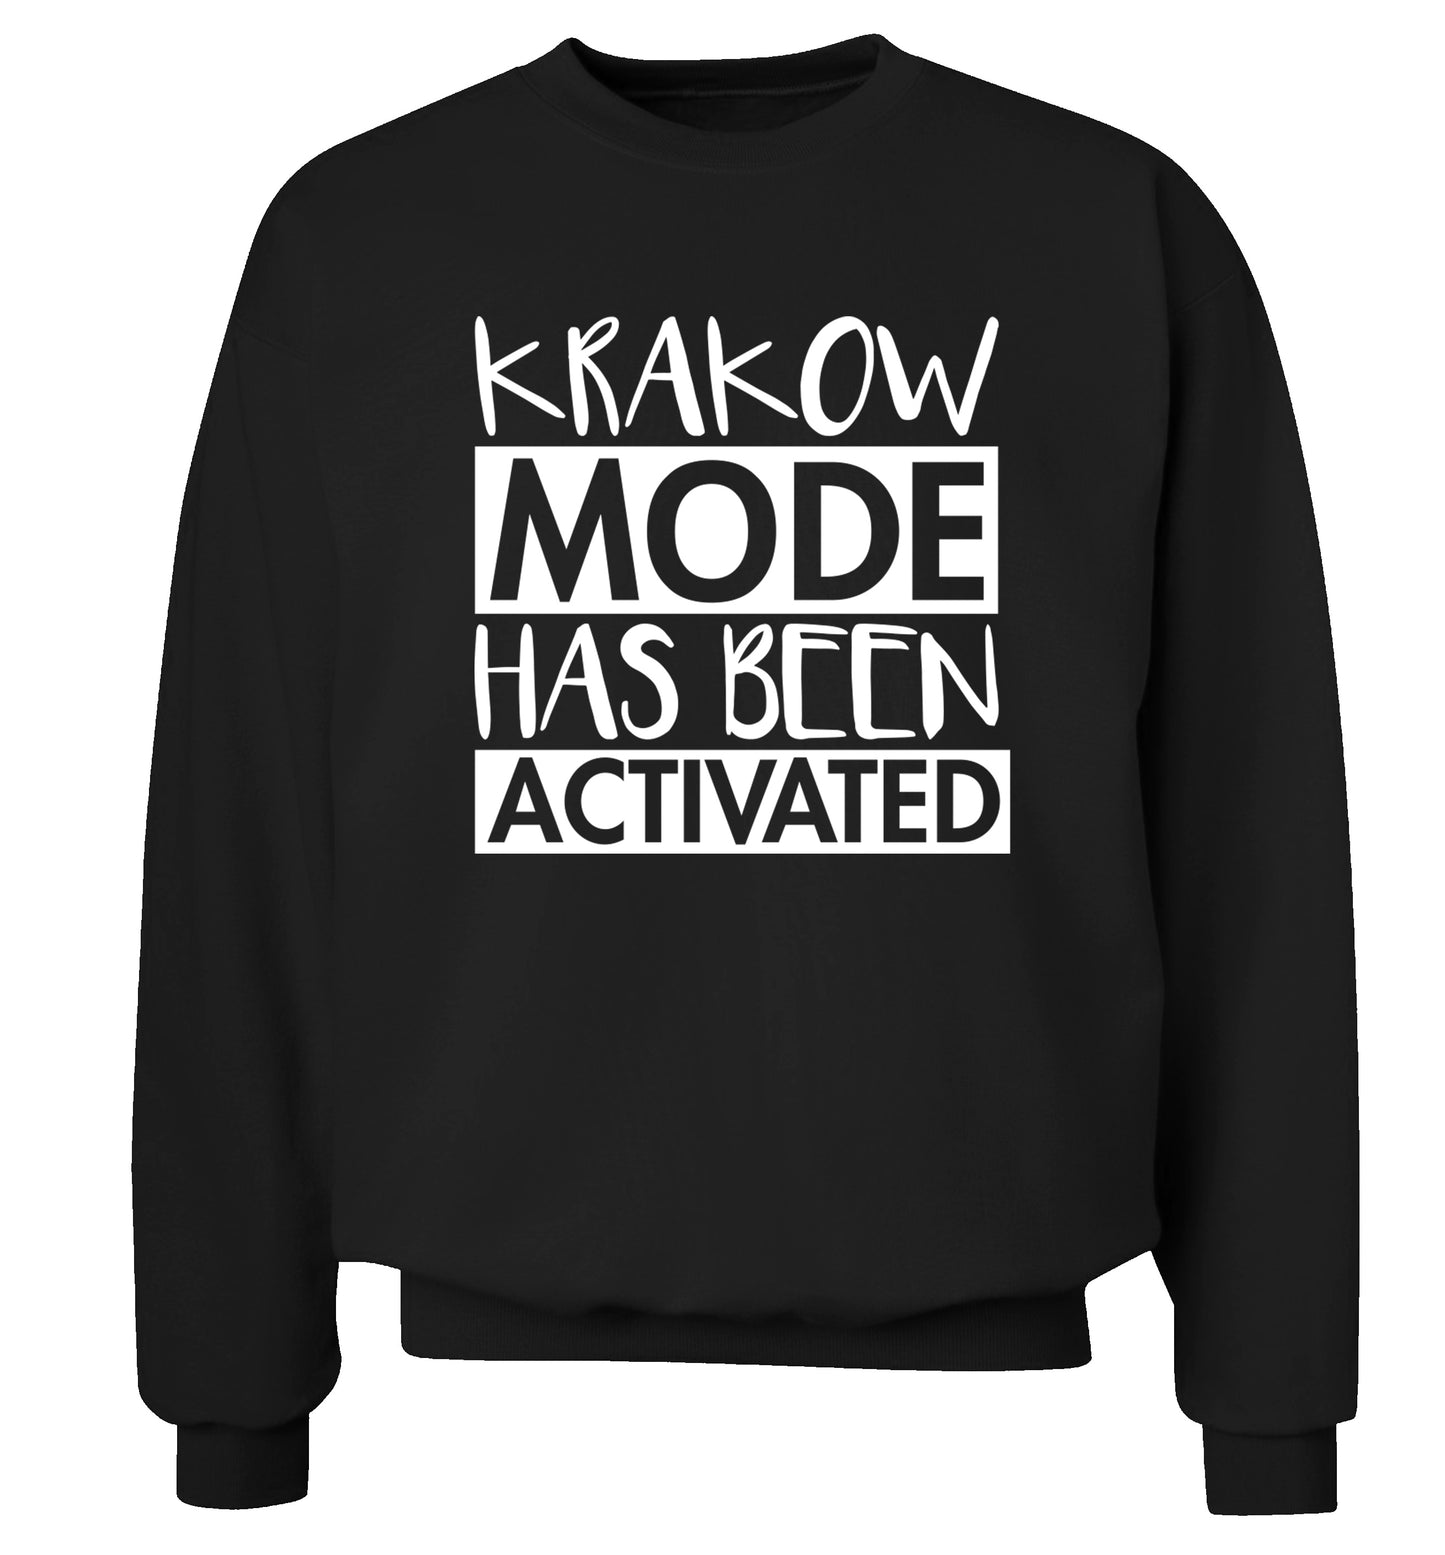 Krakow mode has been activated Adult's unisex black Sweater 2XL